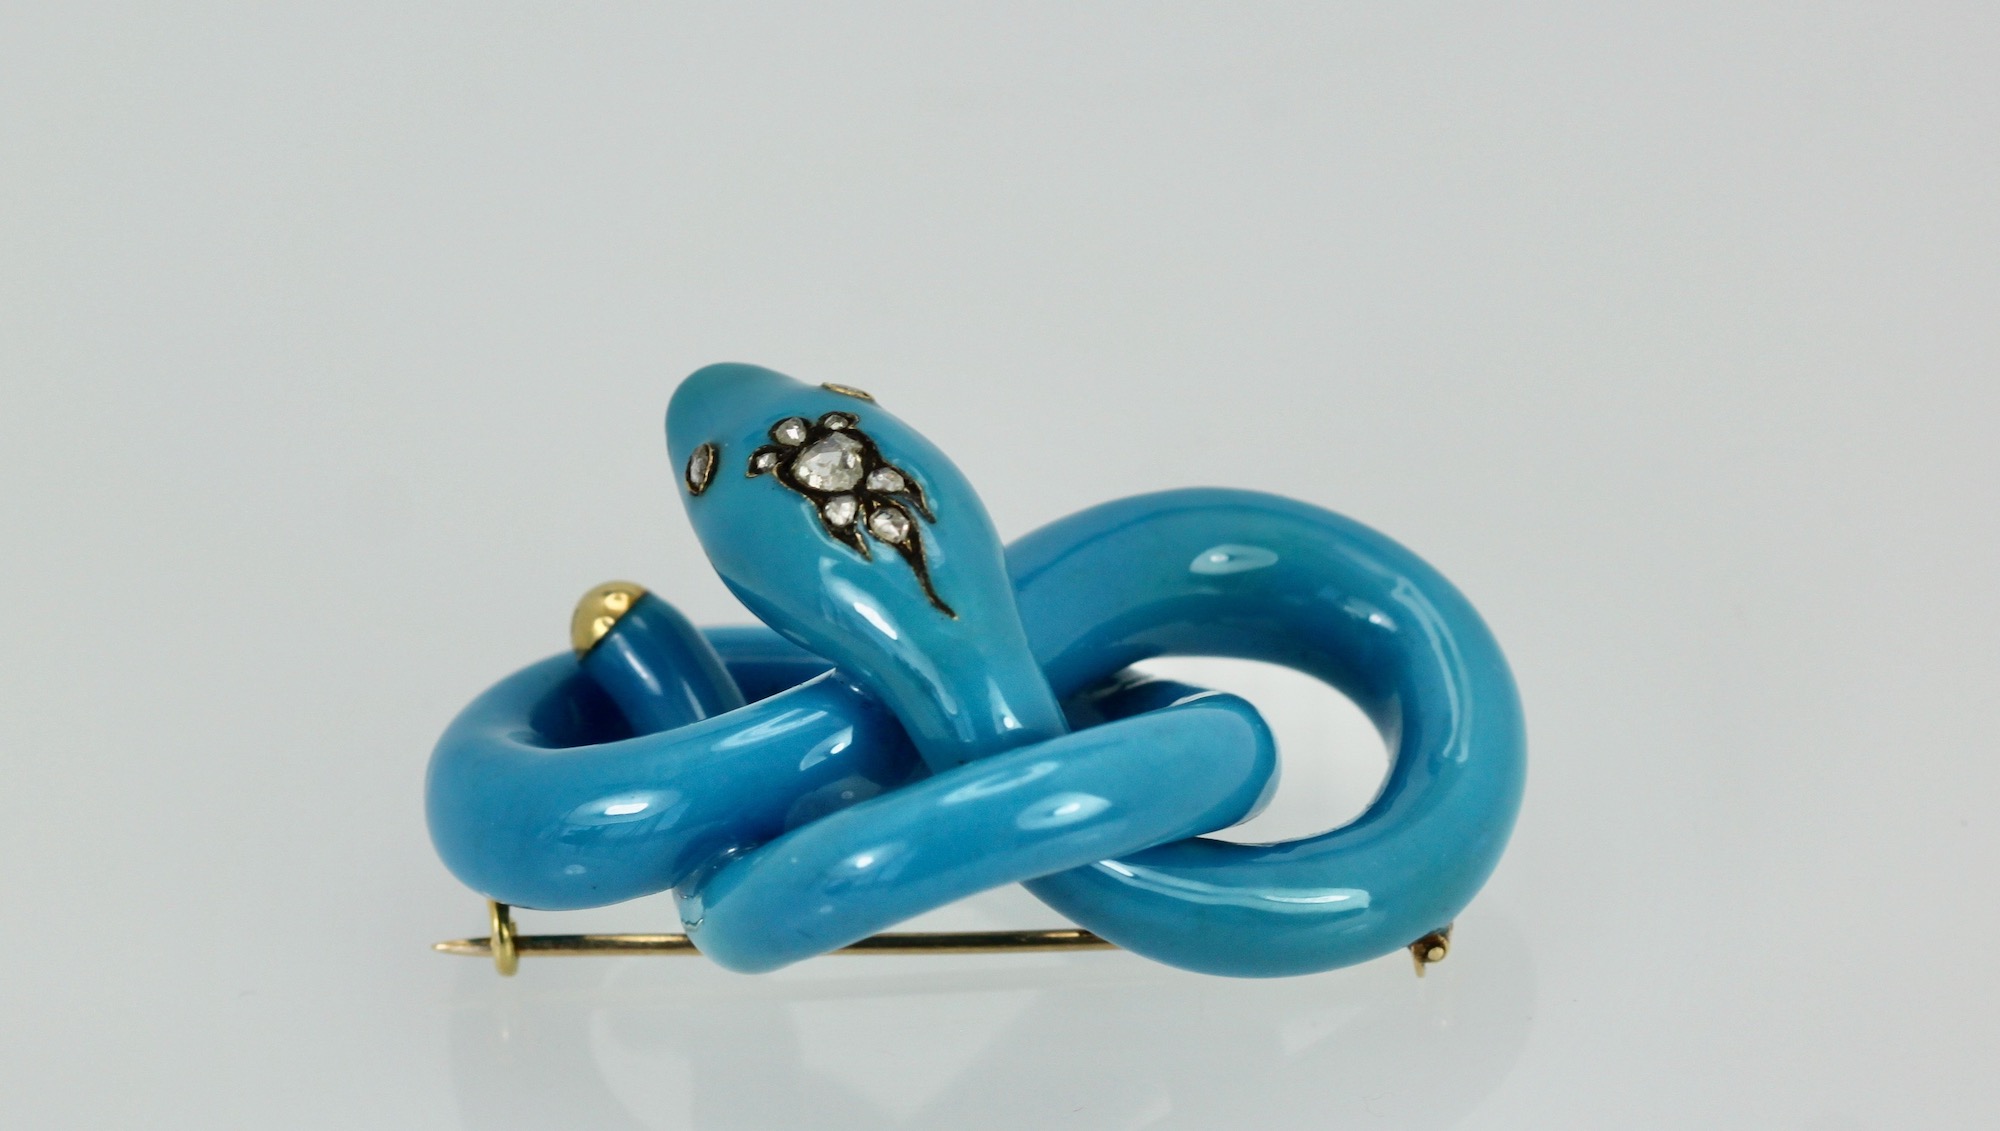 Antique Enamel Diamond Snake Brooch